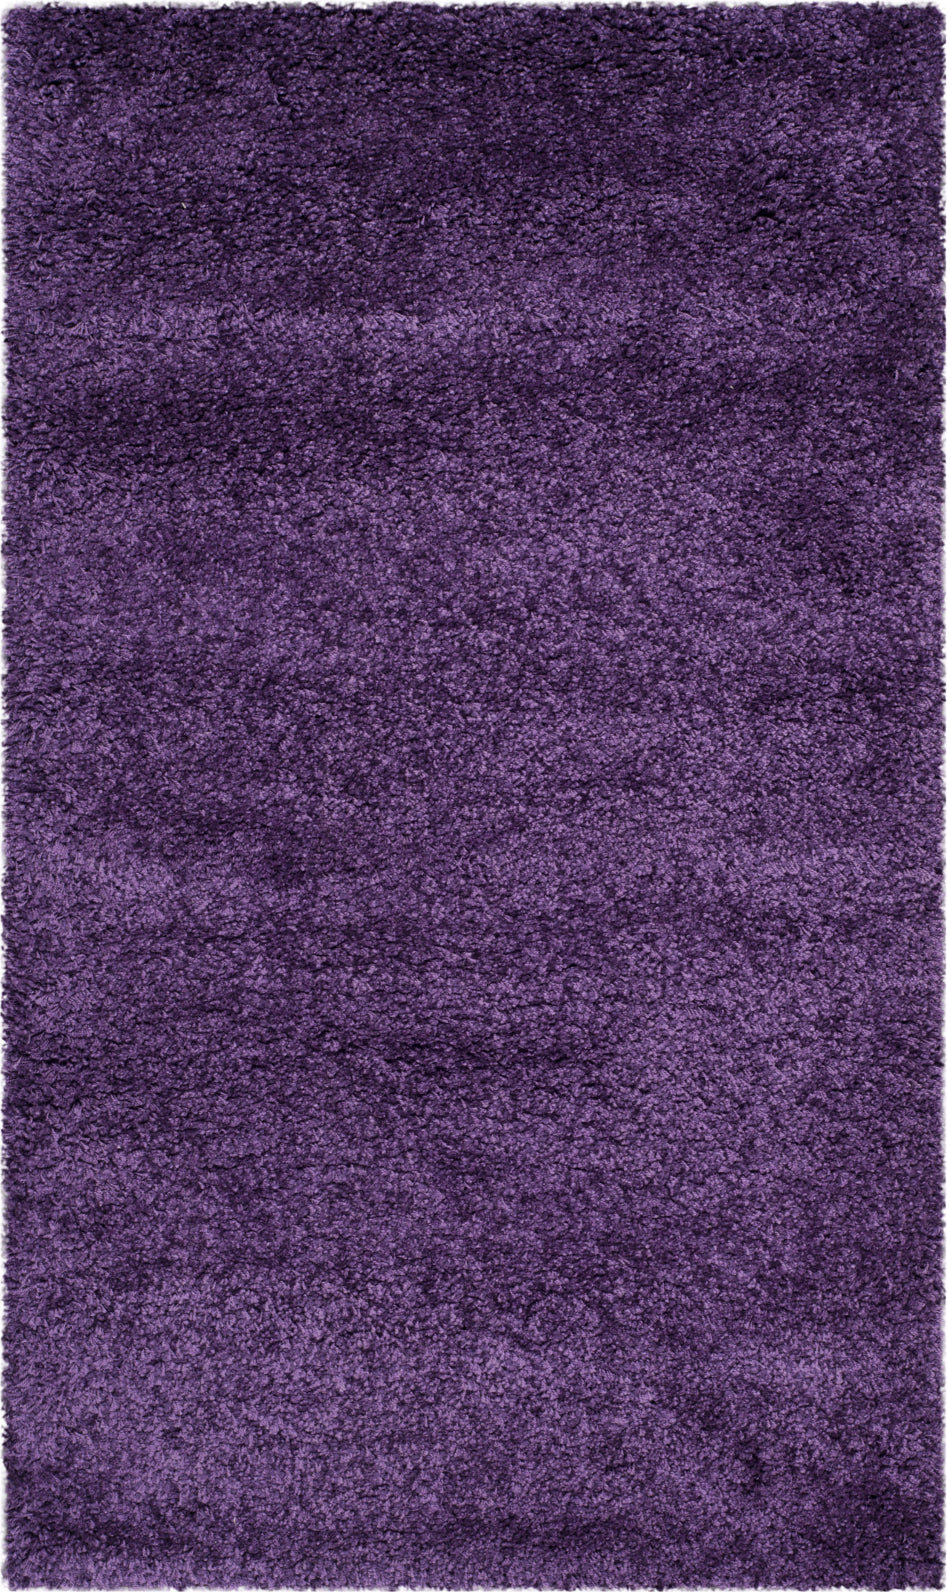 Safavieh Shag SG180 Purple Area Rug main image